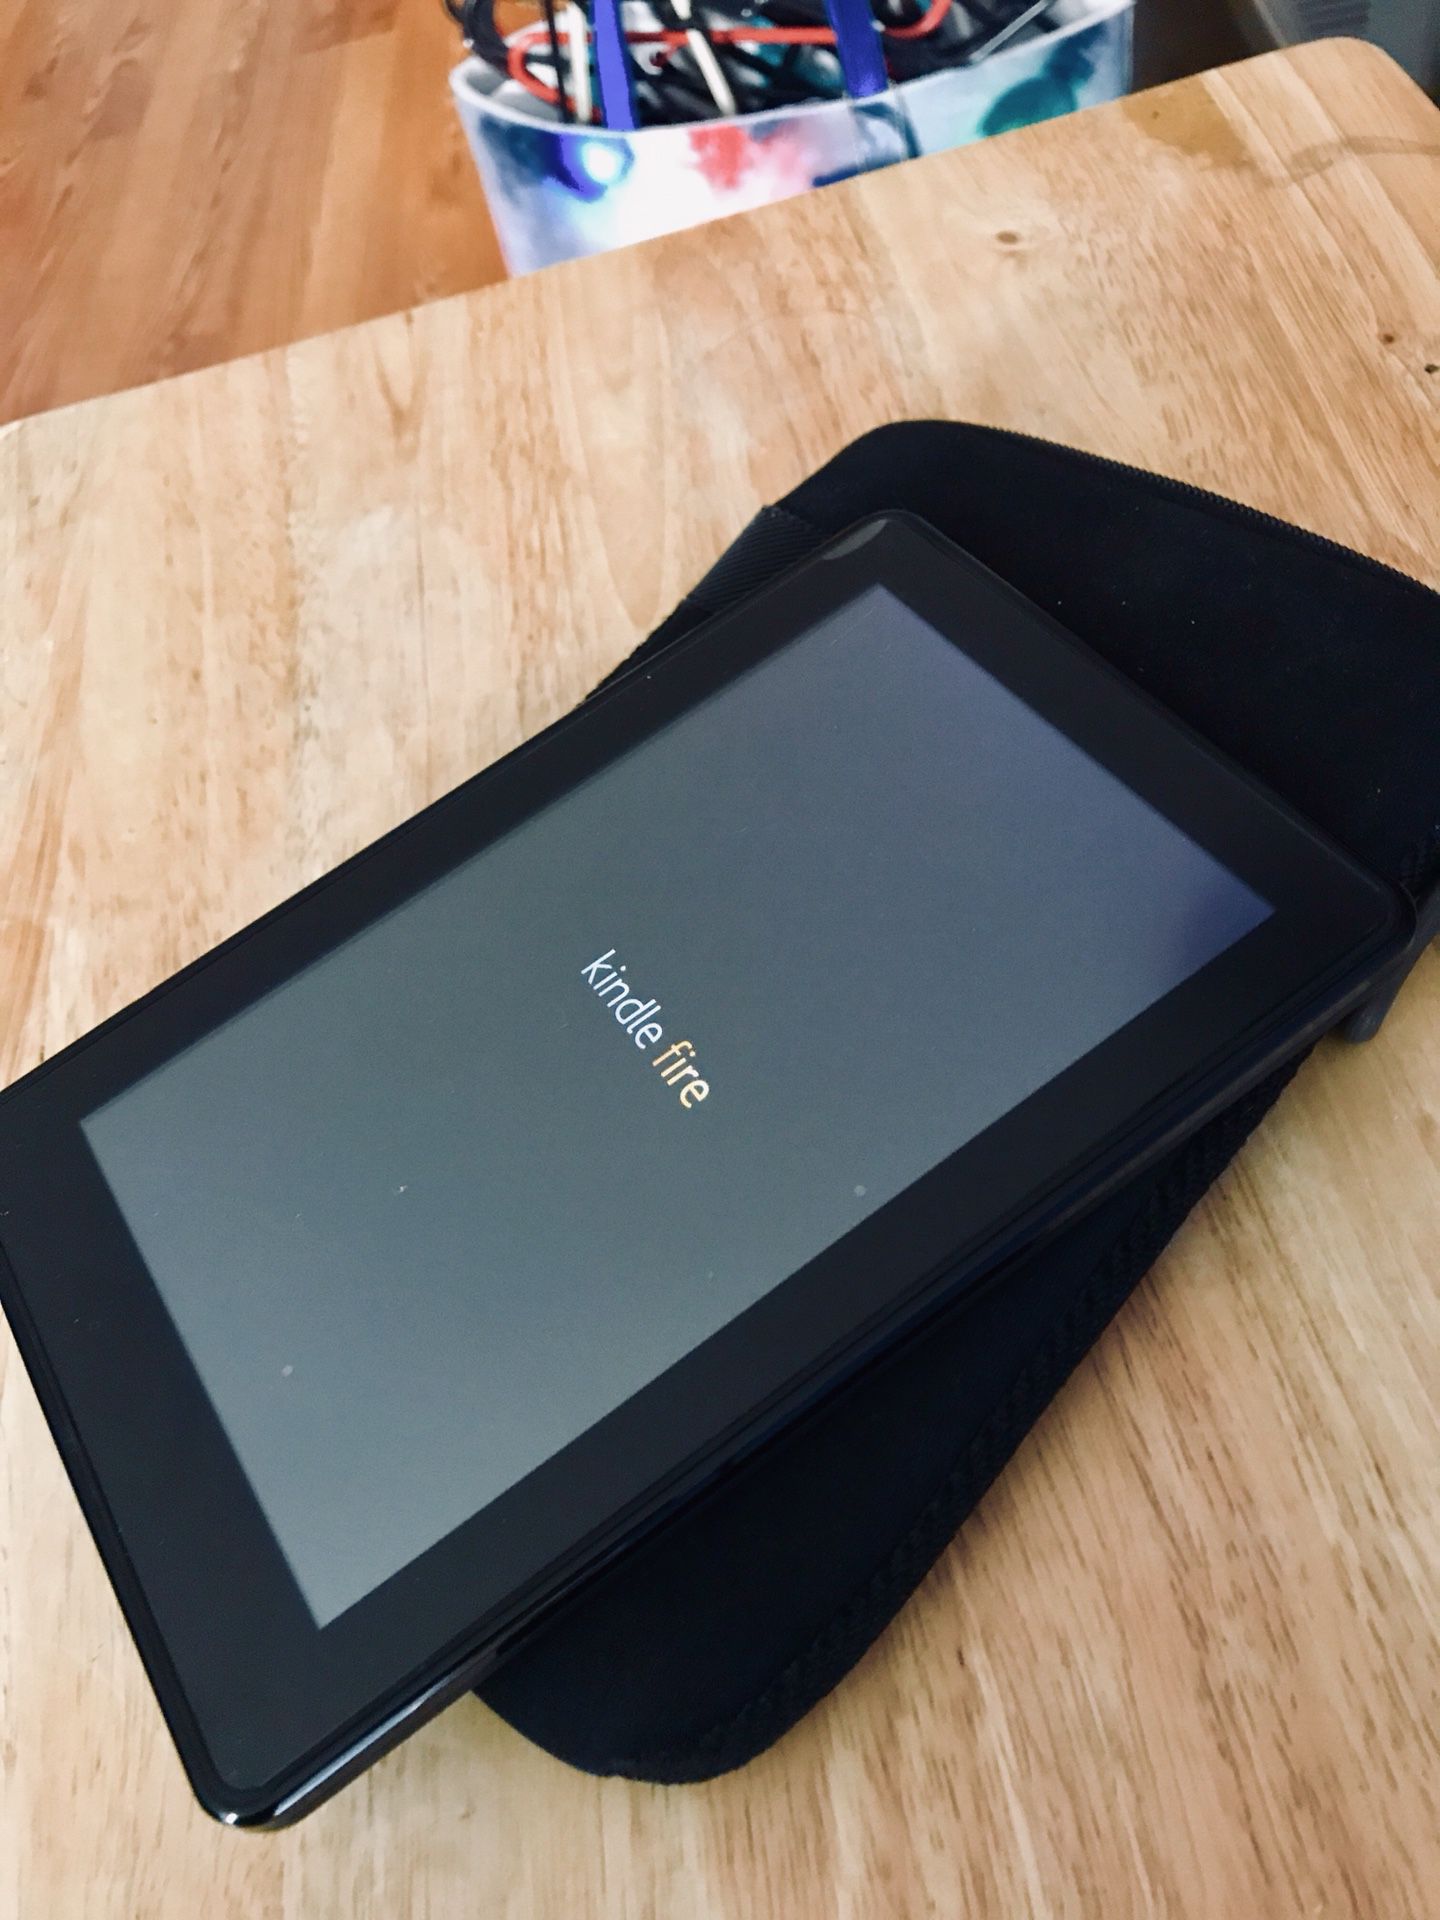 Amazon Kindle Fire (1st generation)